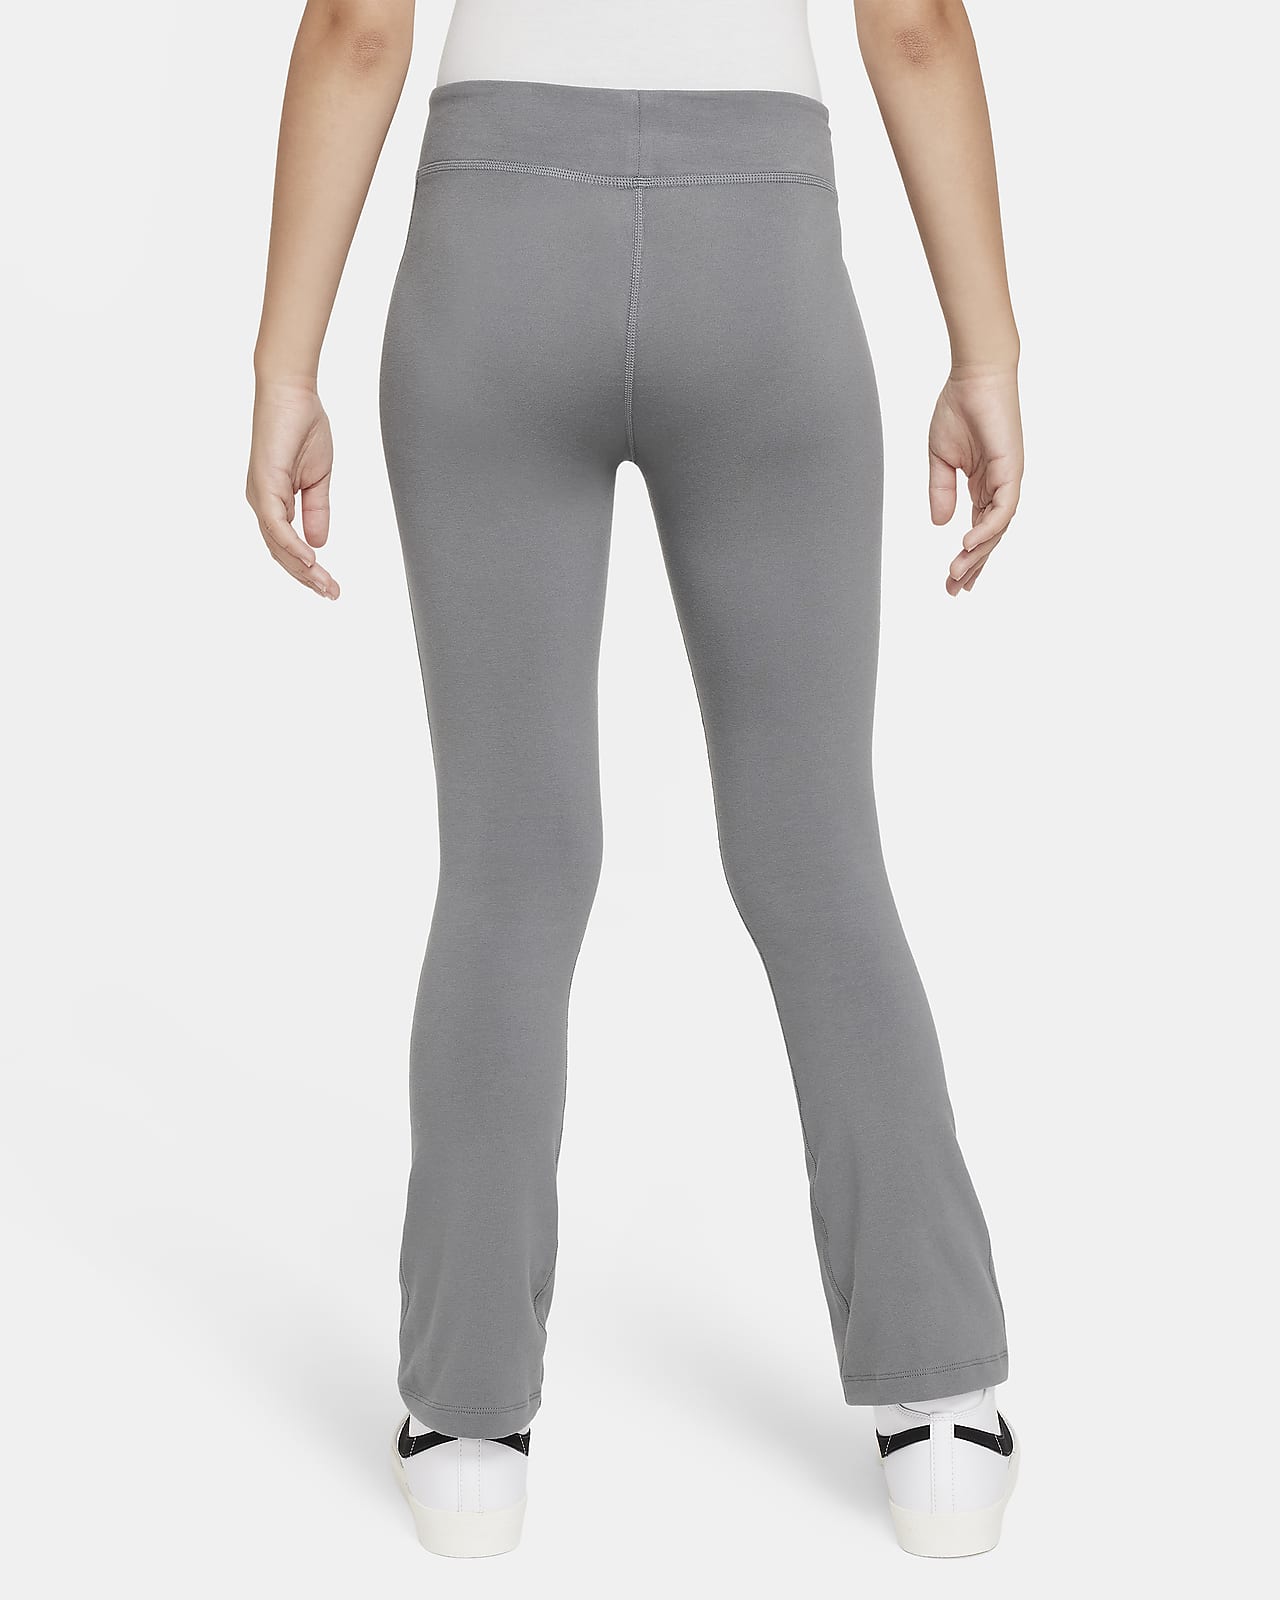 Super Soft Flare Yoga Pants - Urban Grey | Women's Pants | Sweaty Betty